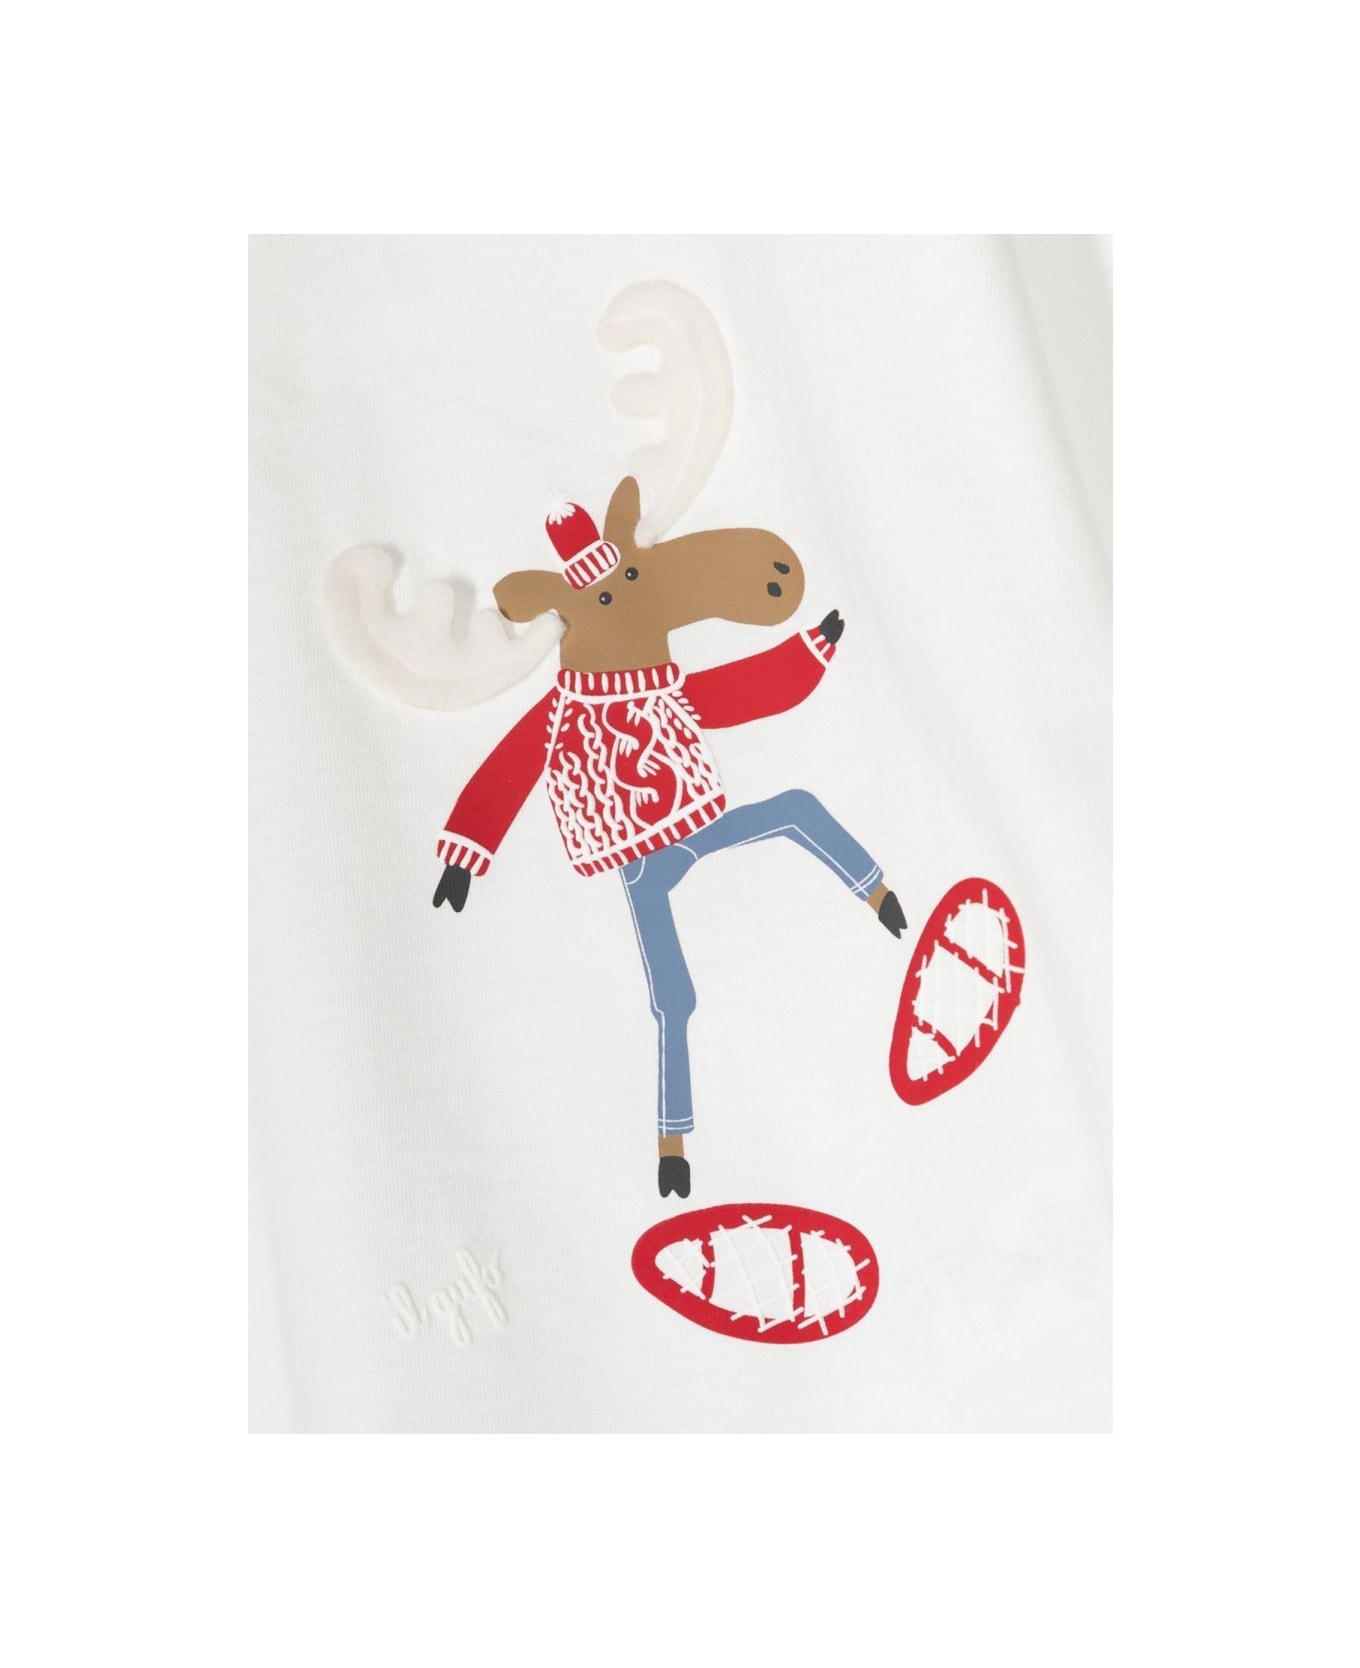 Il Gufo T-shirt M/l Reindeer - WHITE